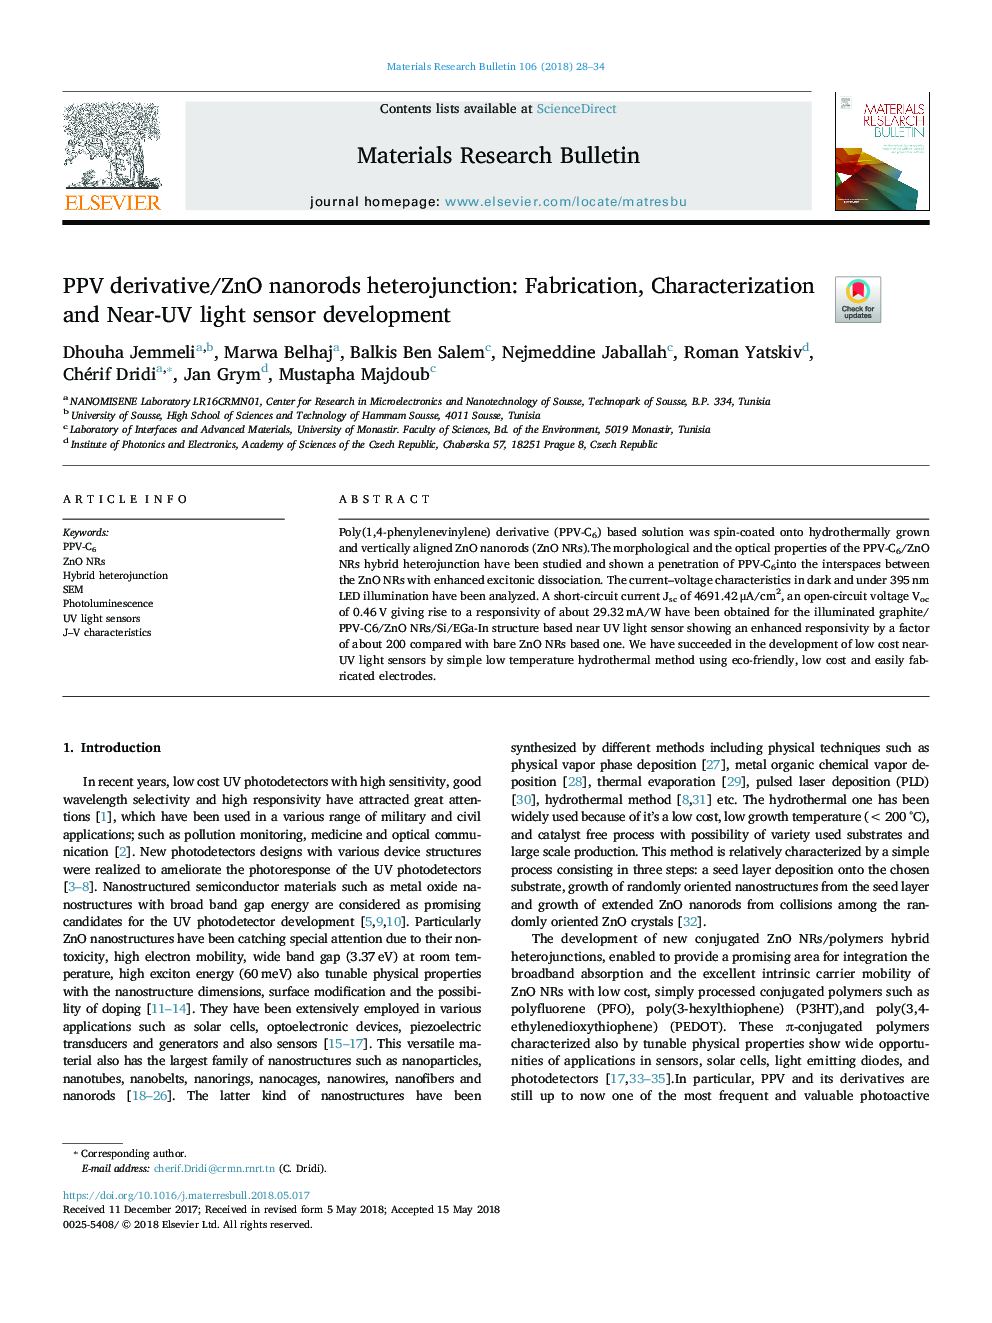 PPV derivative/ZnO nanorods heterojunction: Fabrication, Characterization and Near-UV light sensor development